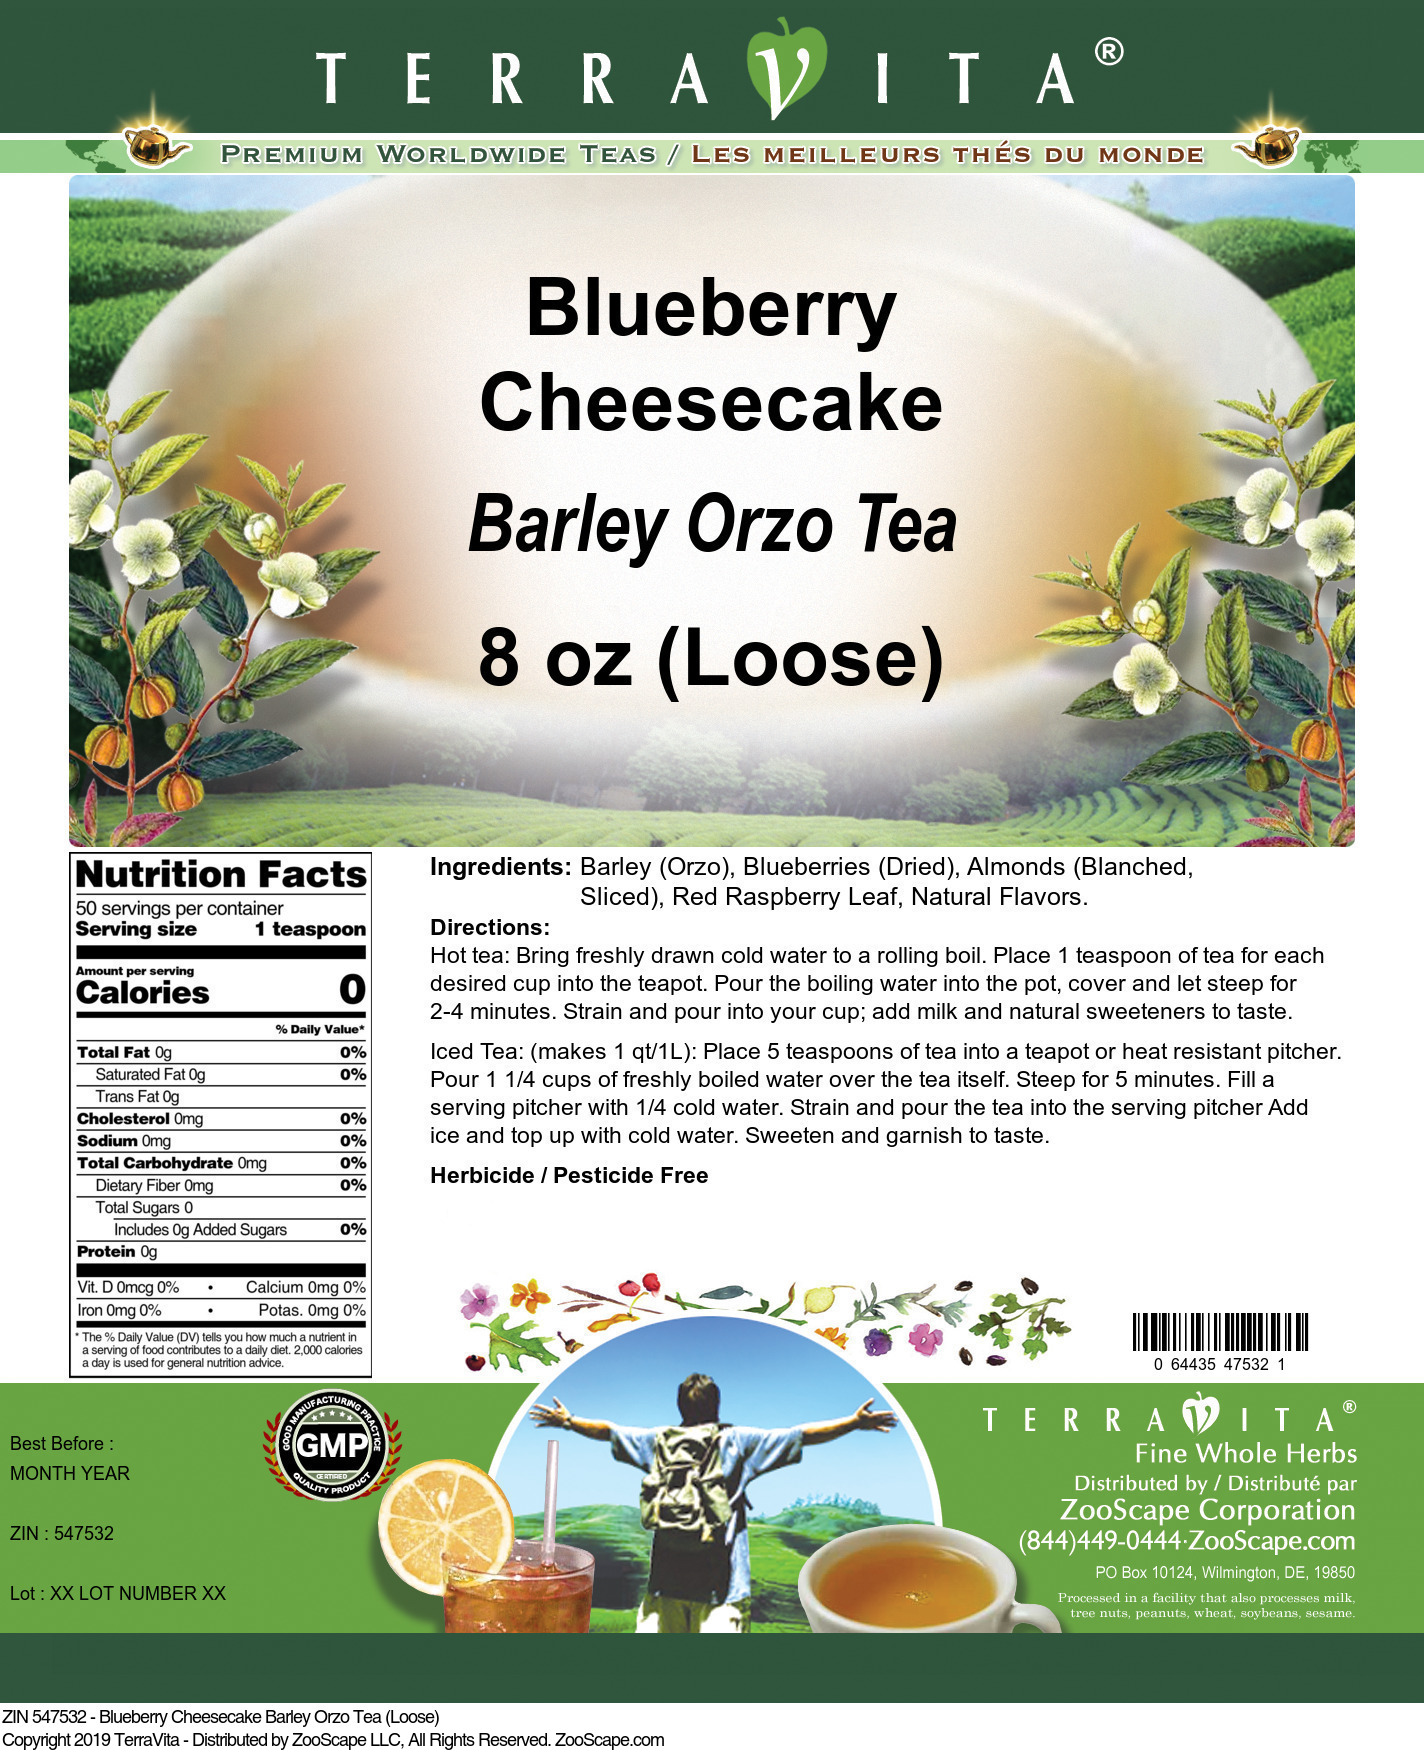 Blueberry Cheesecake Barley Orzo Tea (Loose) - Label